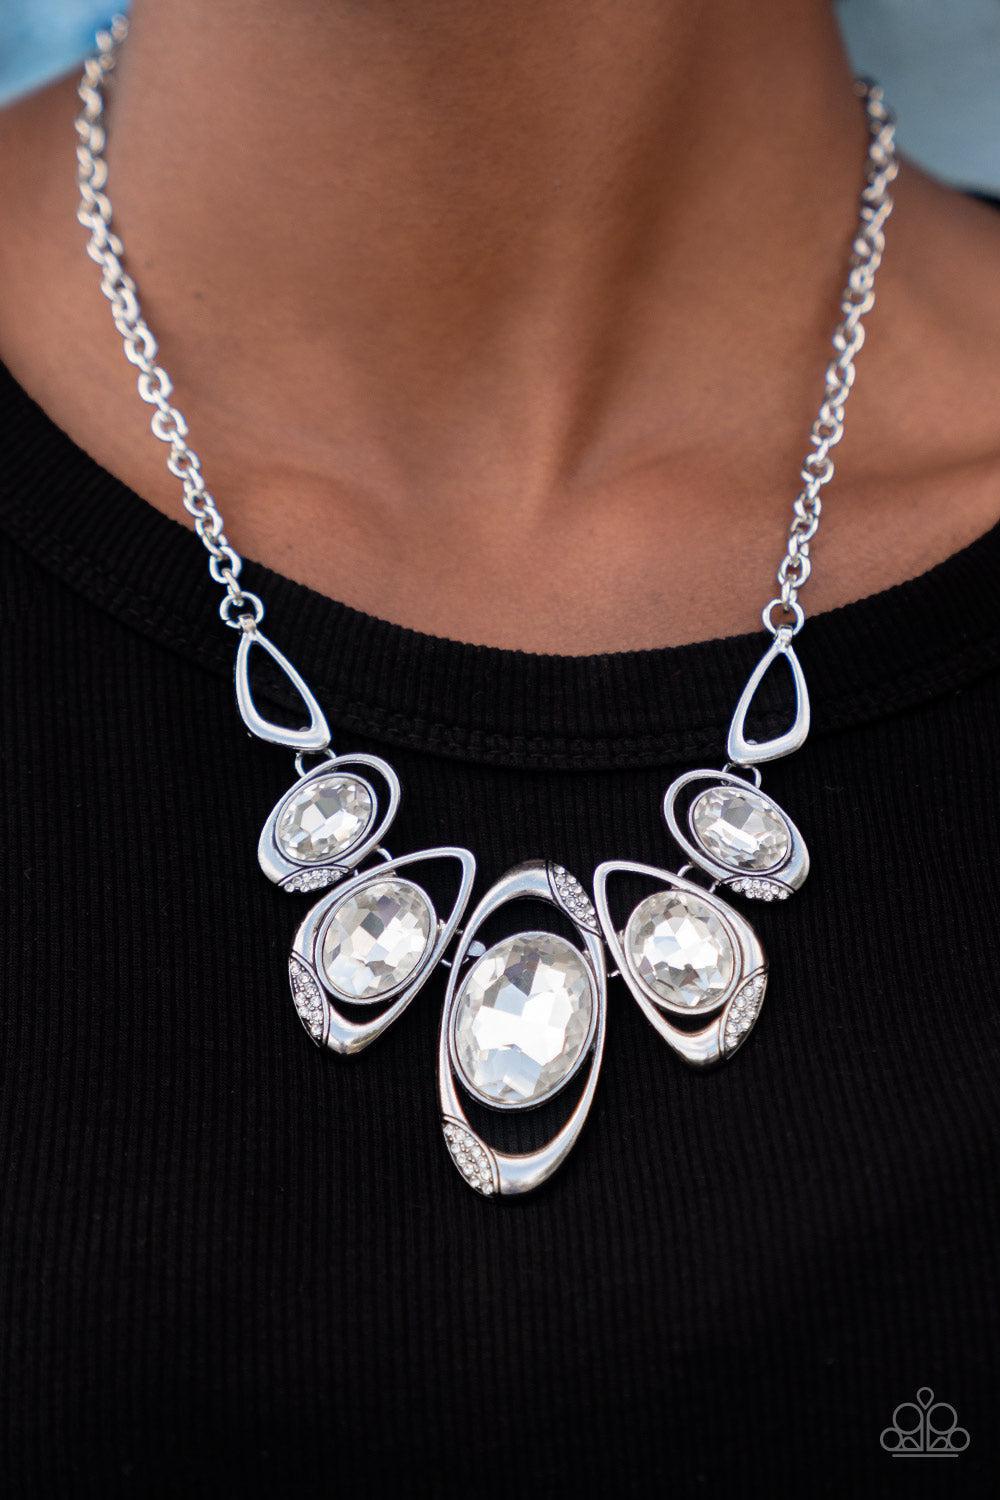 Hypnotic Twinkle White Rhinestone Necklace - Paparazzi Accessories- lightbox - CarasShop.com - $5 Jewelry by Cara Jewels